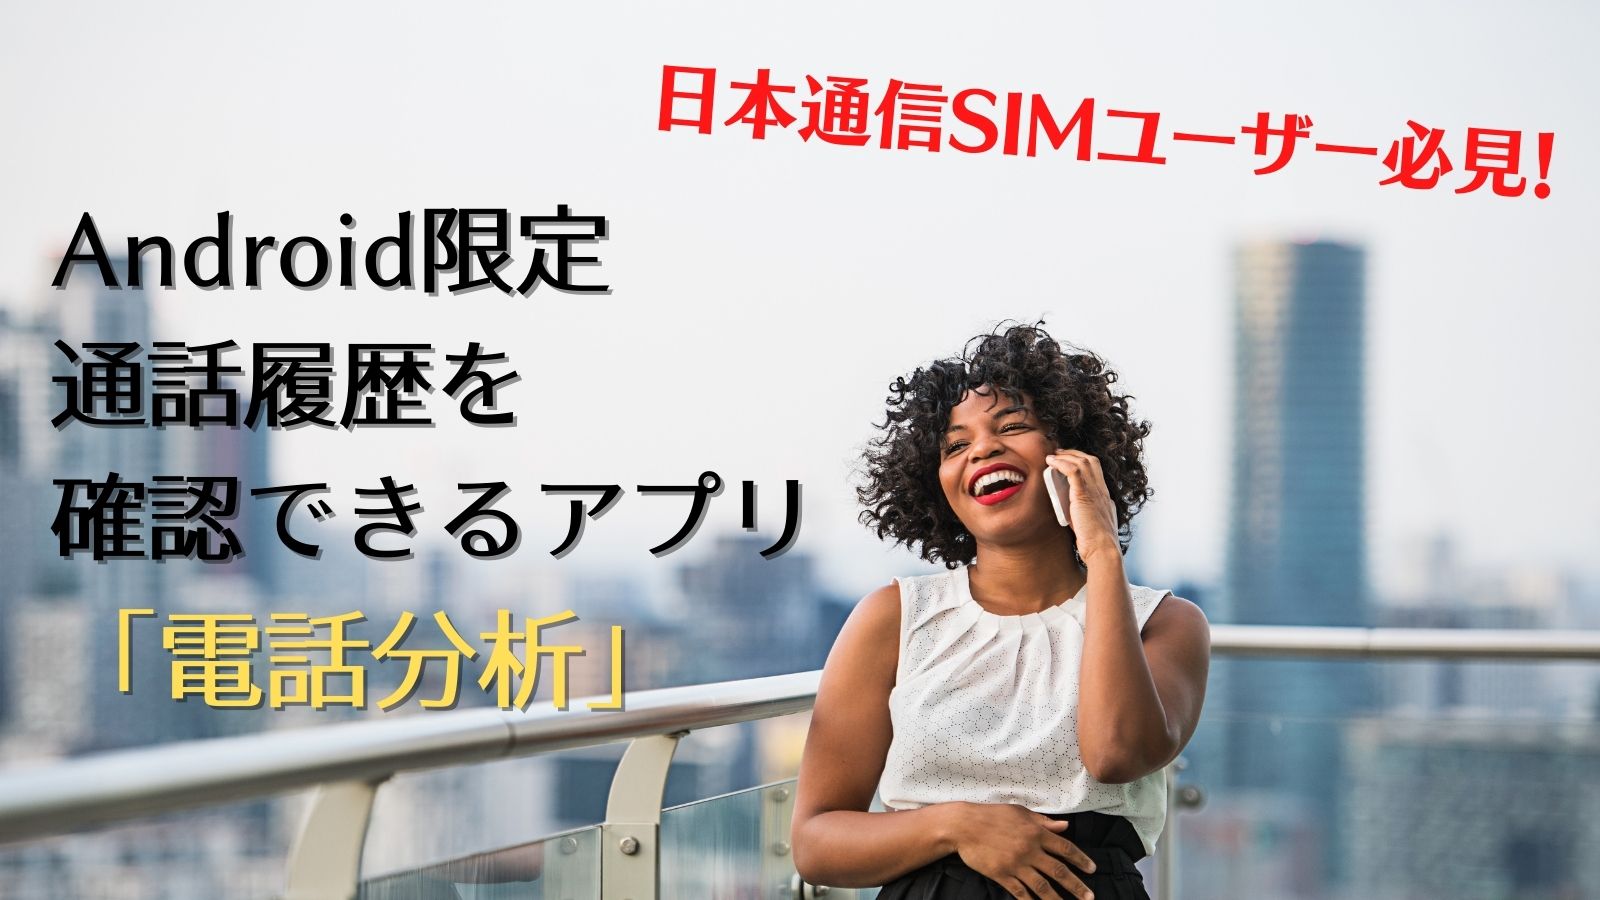 Tips 日本通信sim必見 1か月の通話時間を確認できるアプリ 電話分析 Android限定 ひとぅブログ